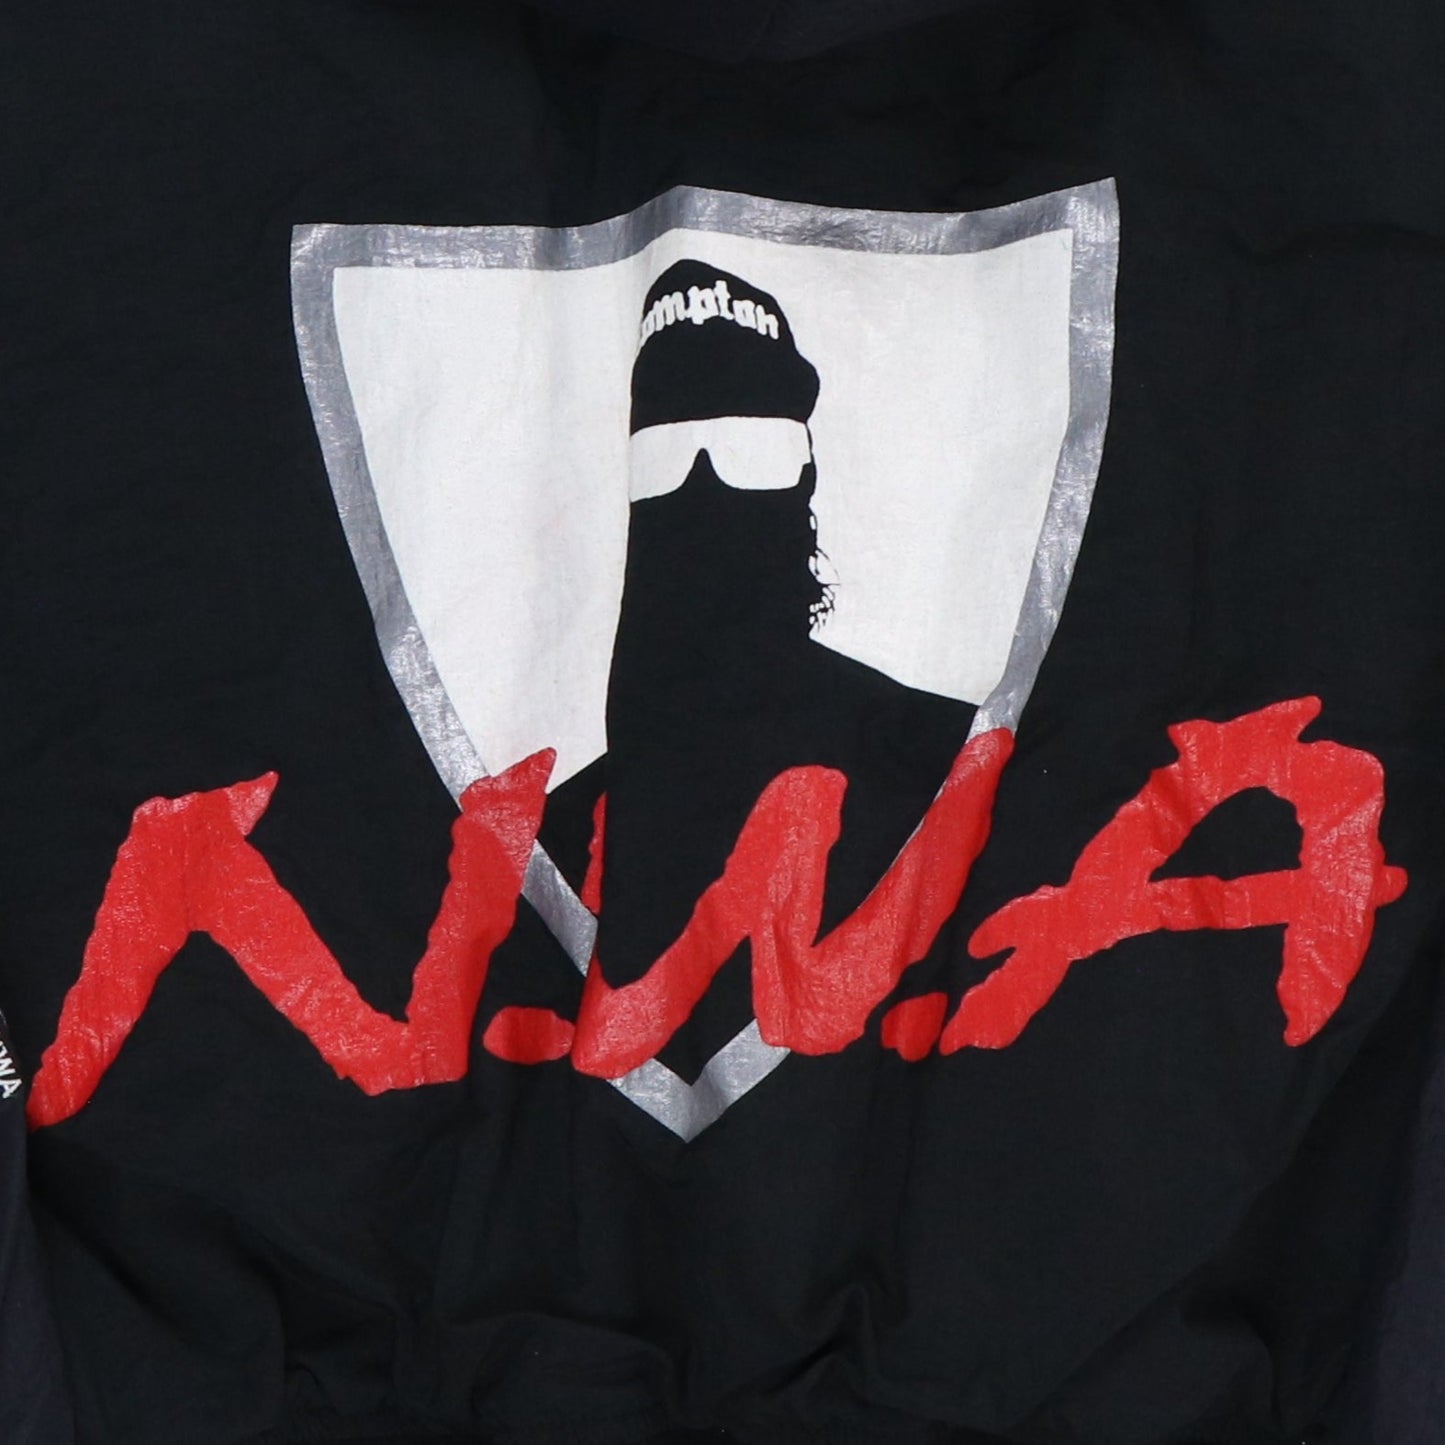 1991 NWA Niggaz4Life Tour Jacket